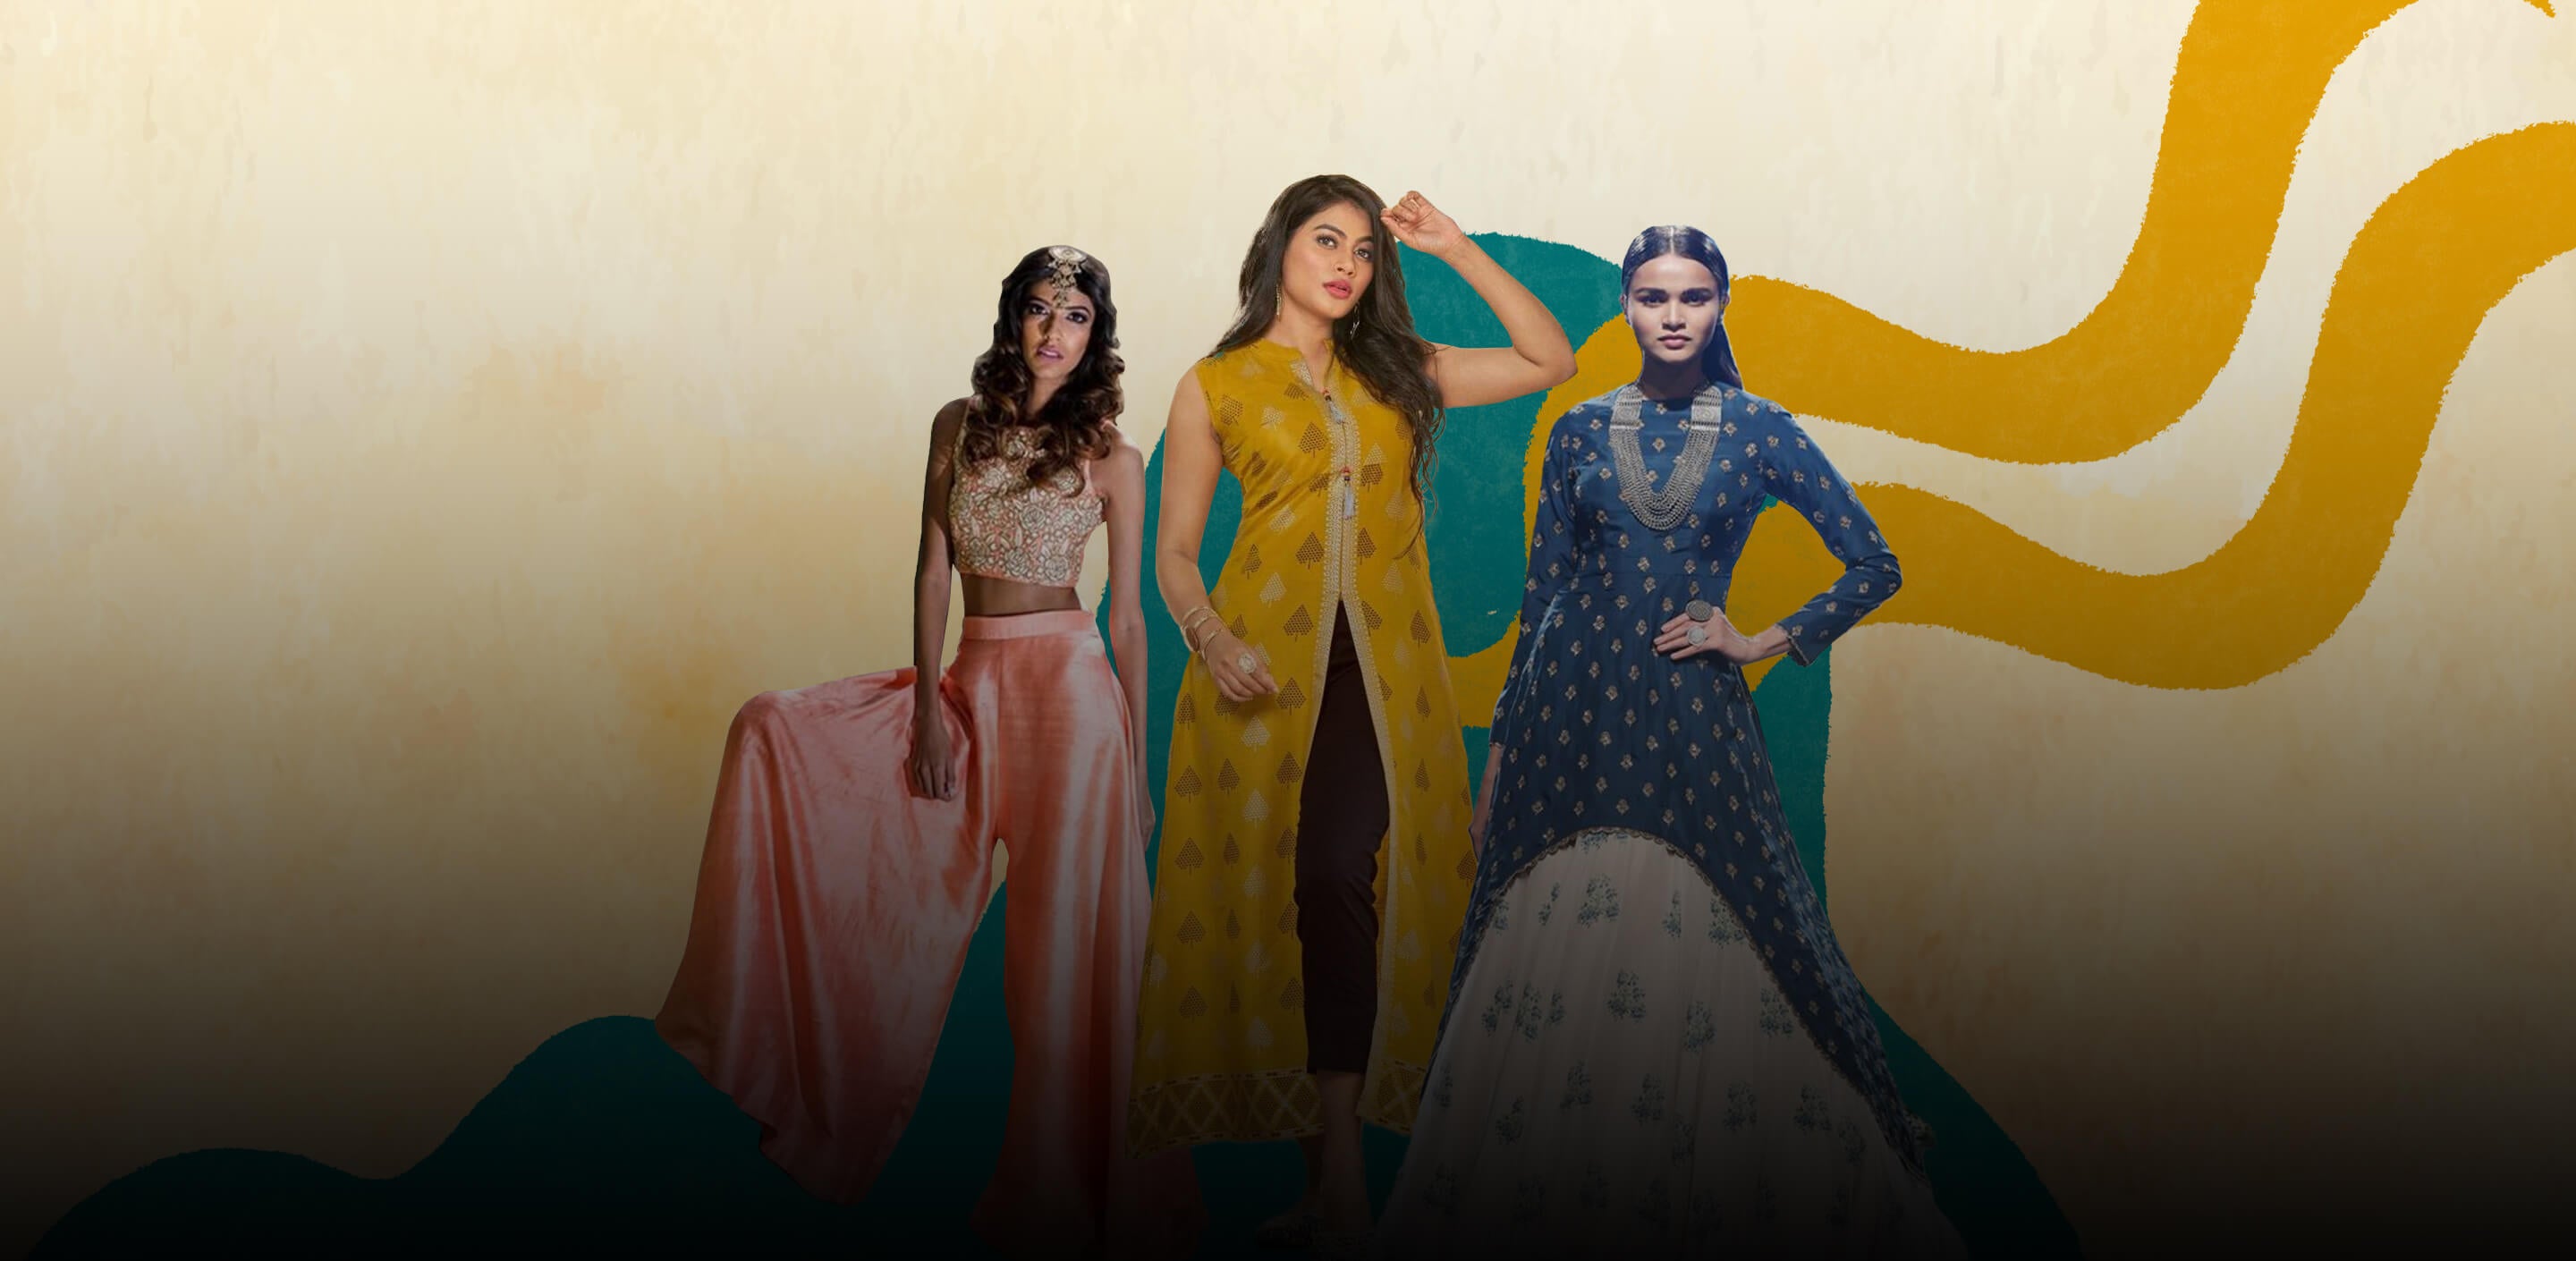 Indian Fusion Outfit Ideas for the Festive Season! - KALKI Fashion Blog